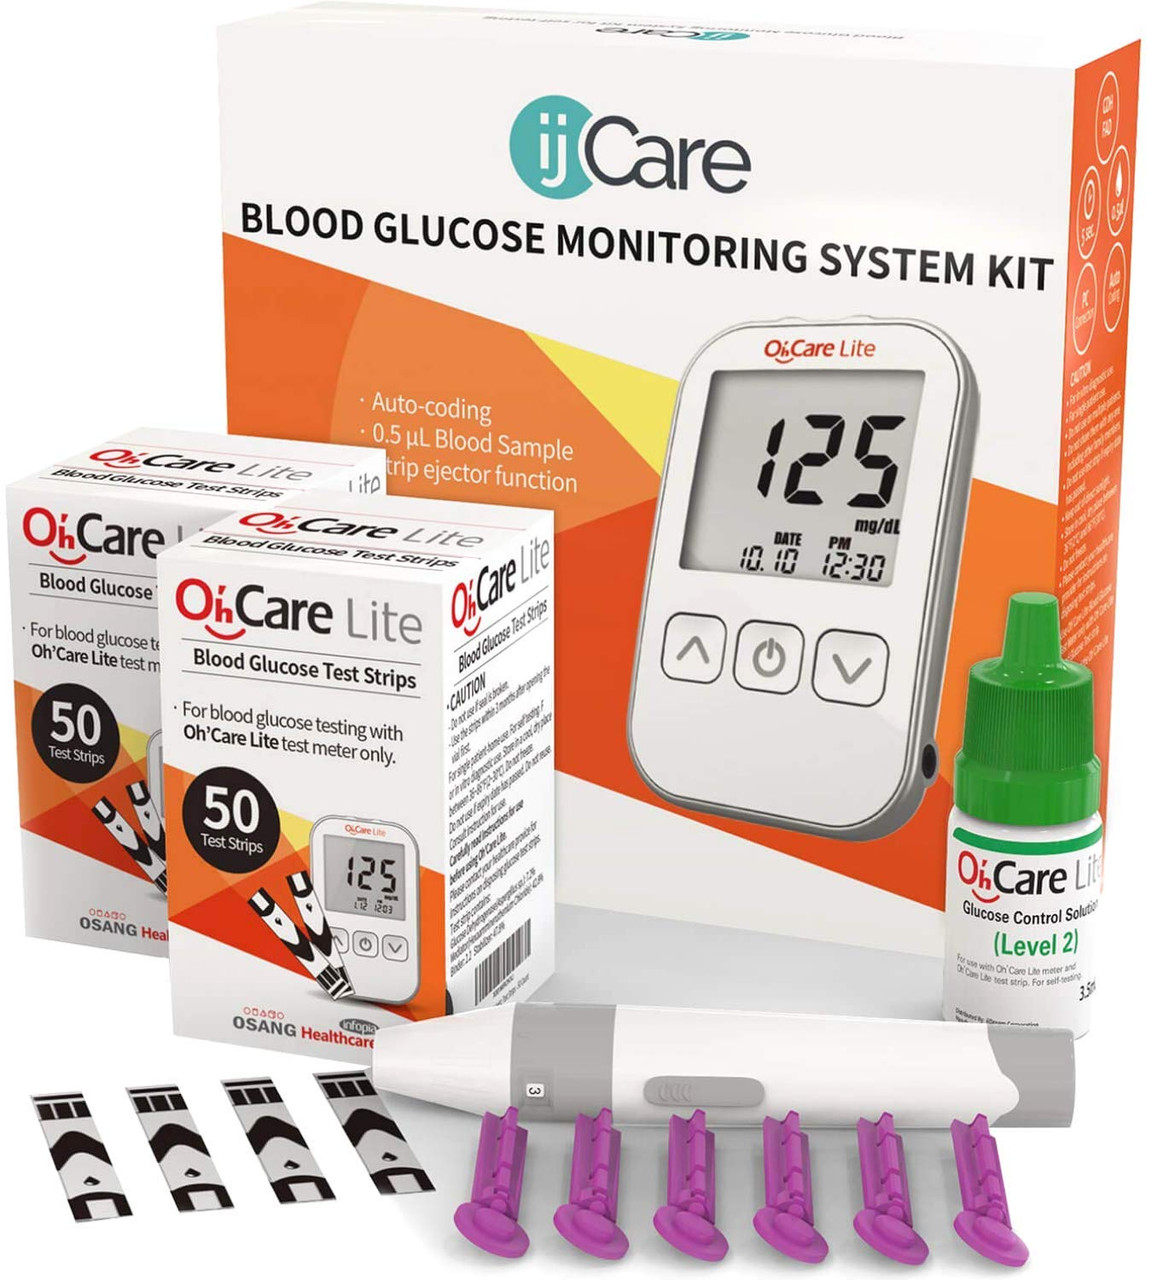 One Drop for Diabetes Starter Kit with Bluetooth-Enabled Glucose Meter,  Chrome/Black/Orange, 1 Lancing Device, 33-Gauge Lancets (10 Count), Test